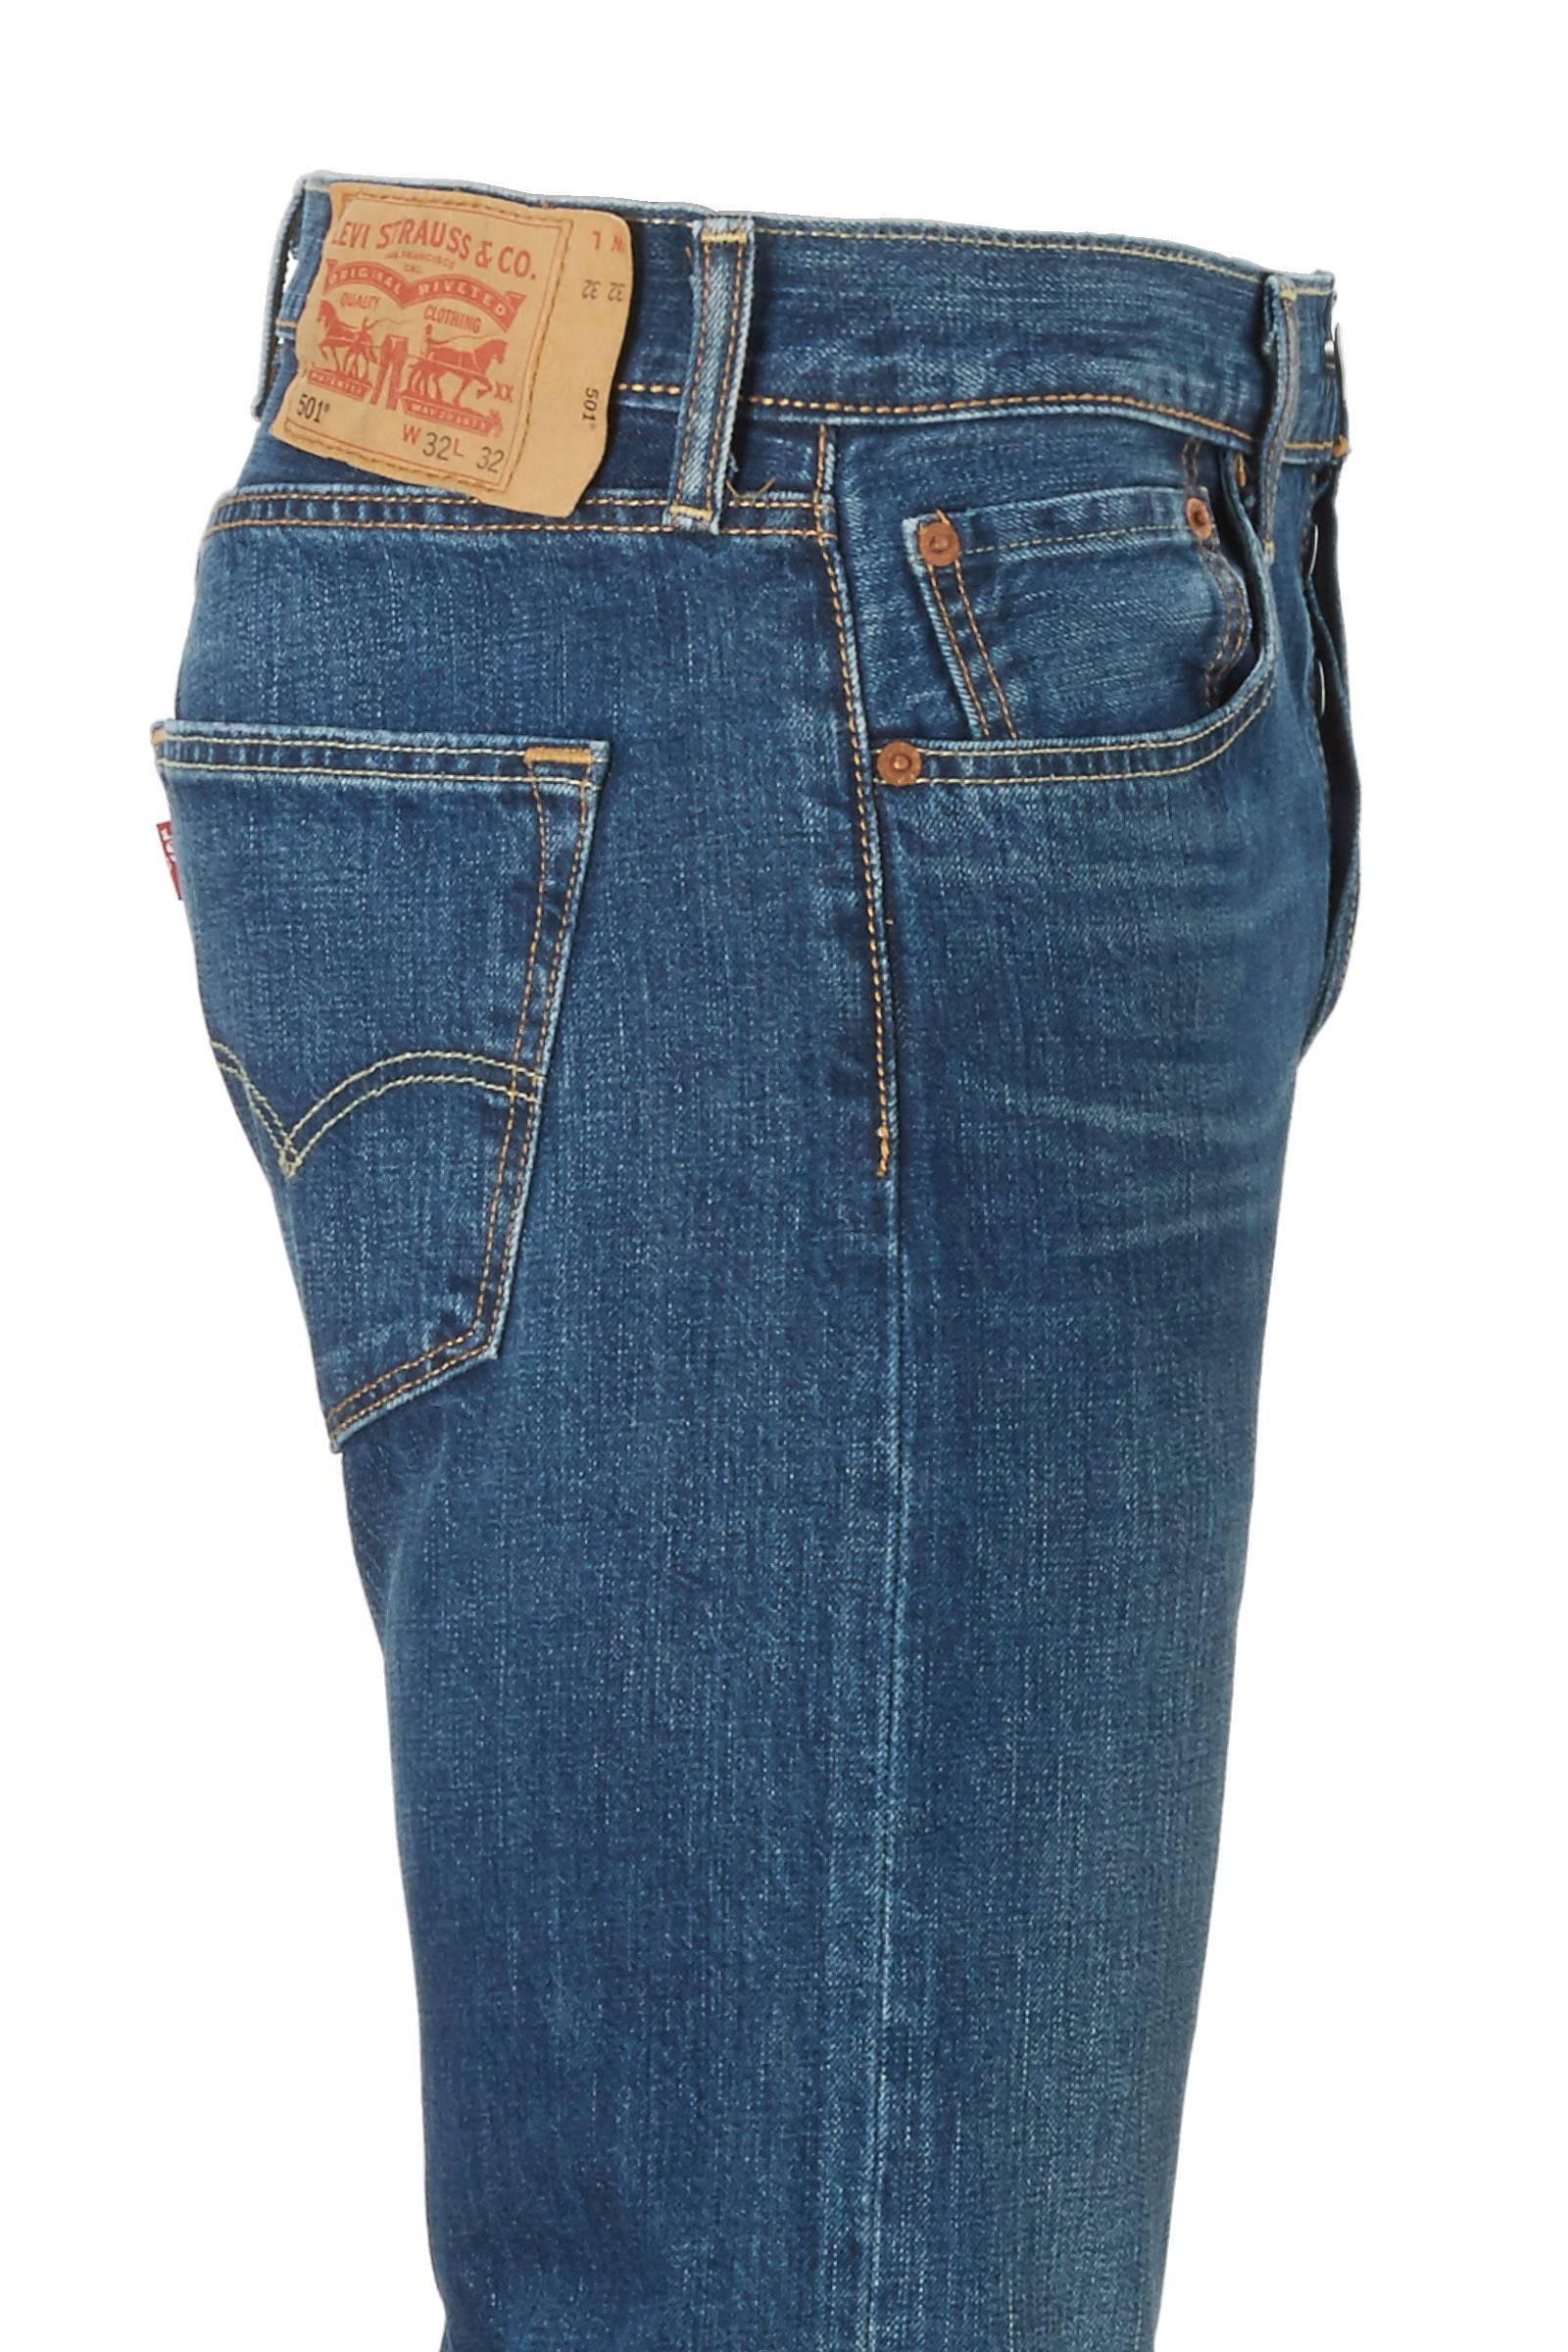 jeans levi's 501 original